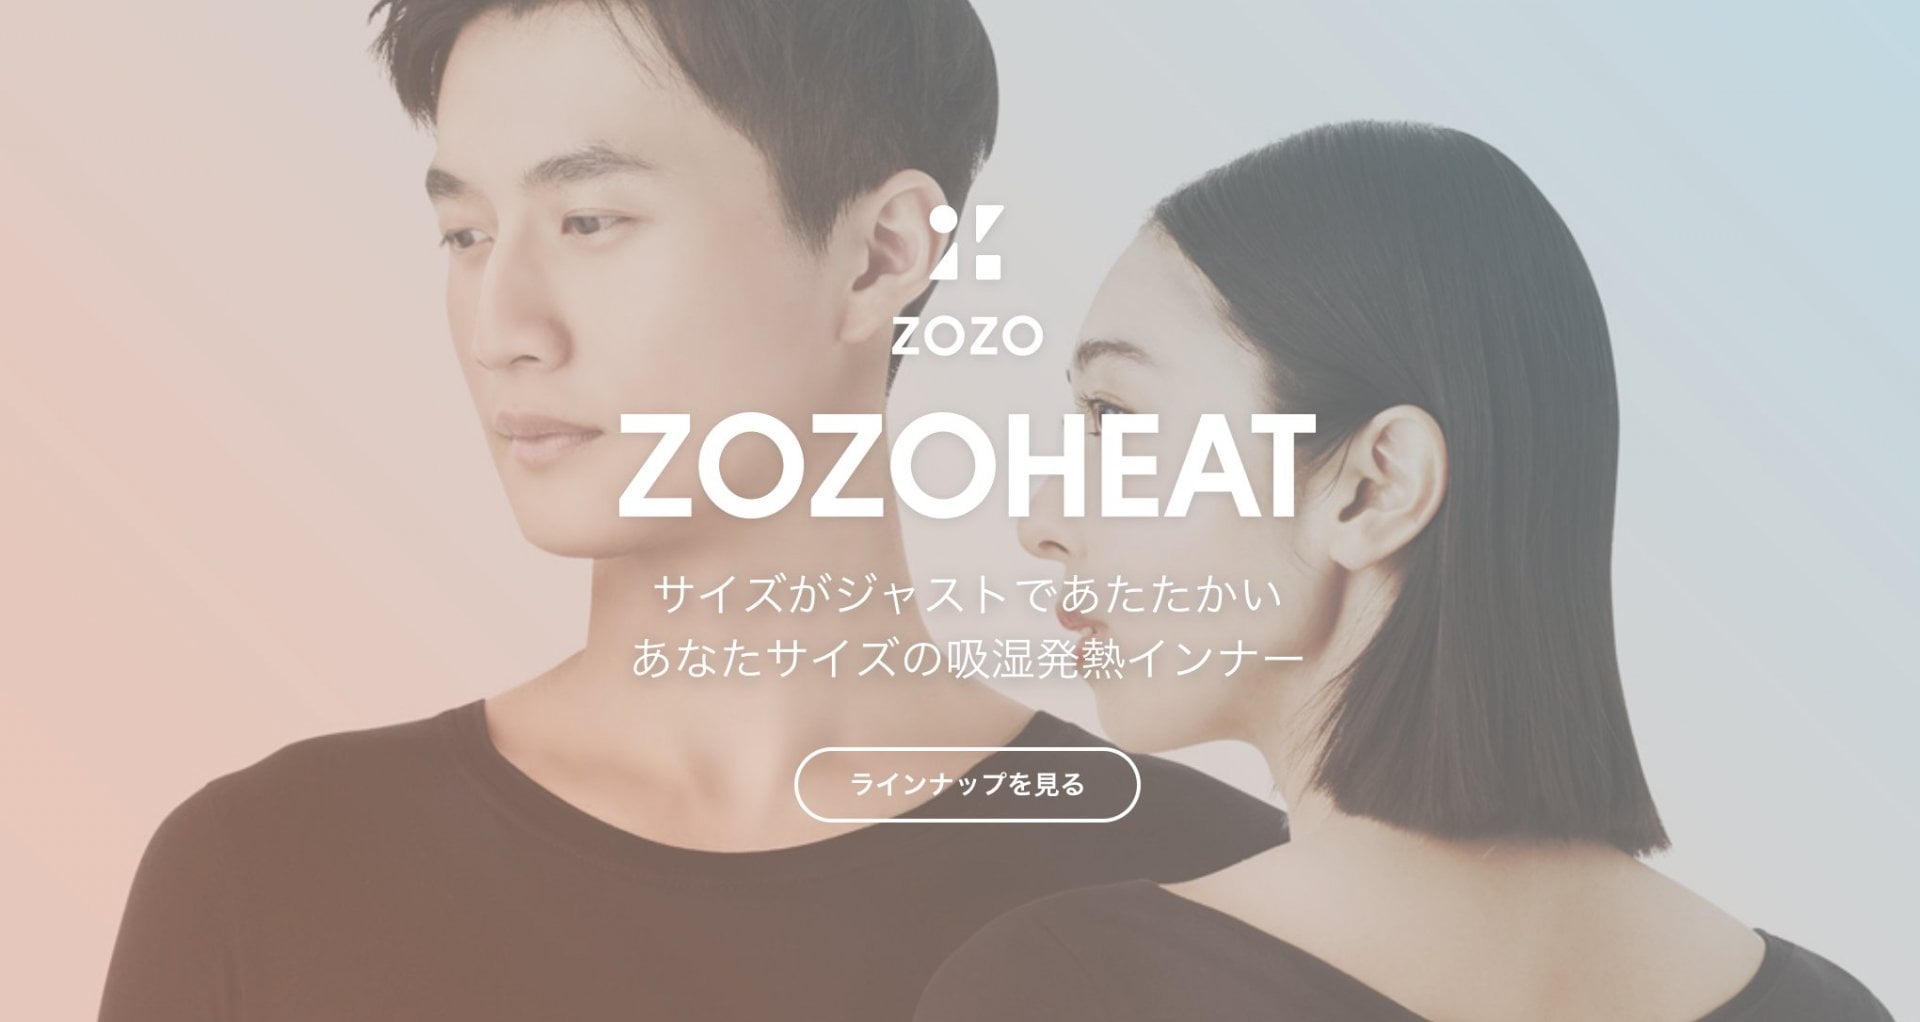 # ZOZOTOWN 新商品發布：ZOZOHEAT 發熱衣系列強勢登場 1